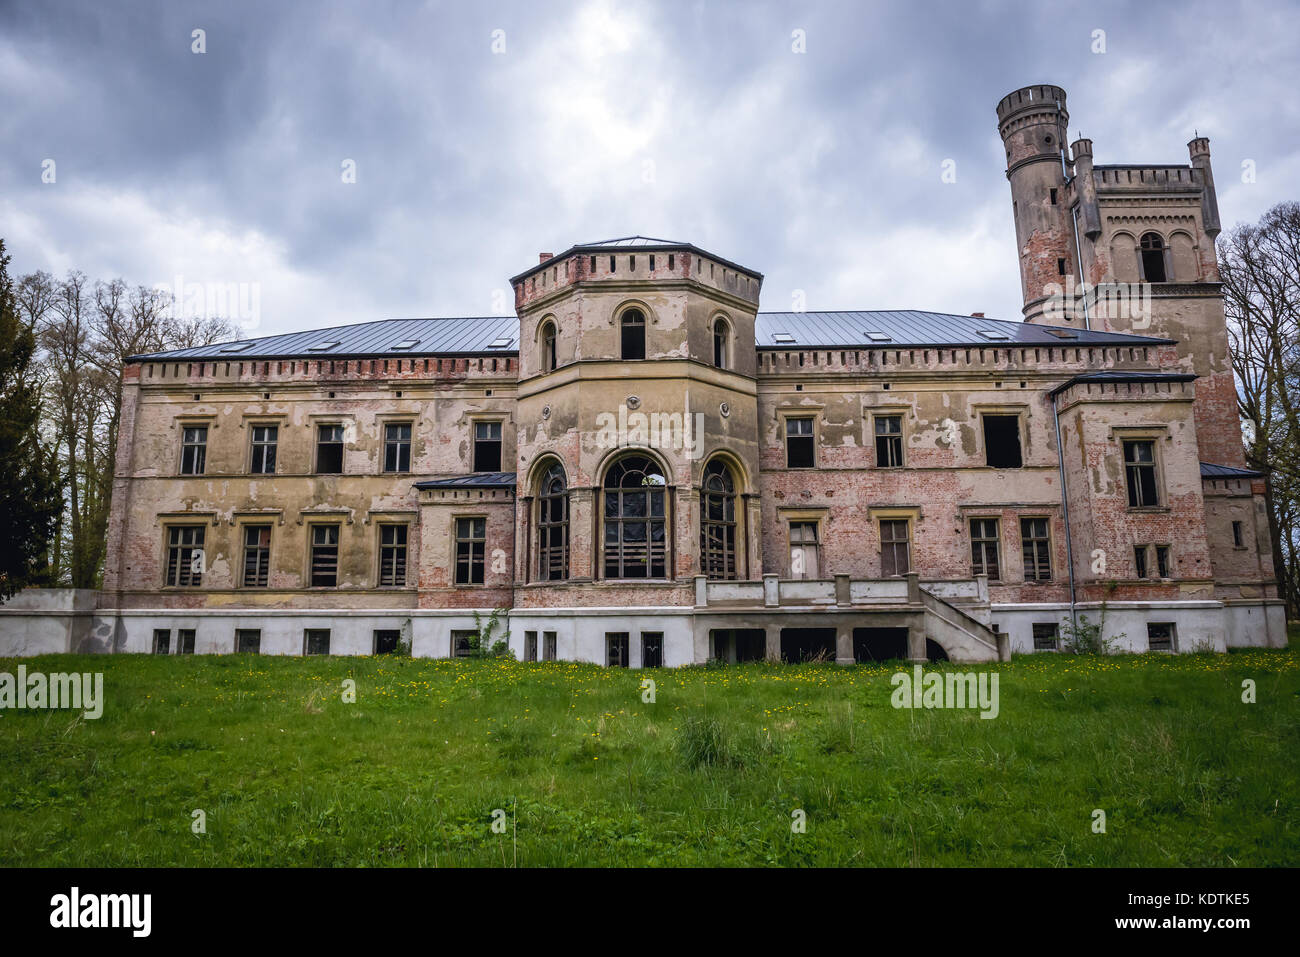 Facade of abandoned Gothic Revival palace in Drezewo village in West Pomeranian Voivodeship of Poland Stock Photo